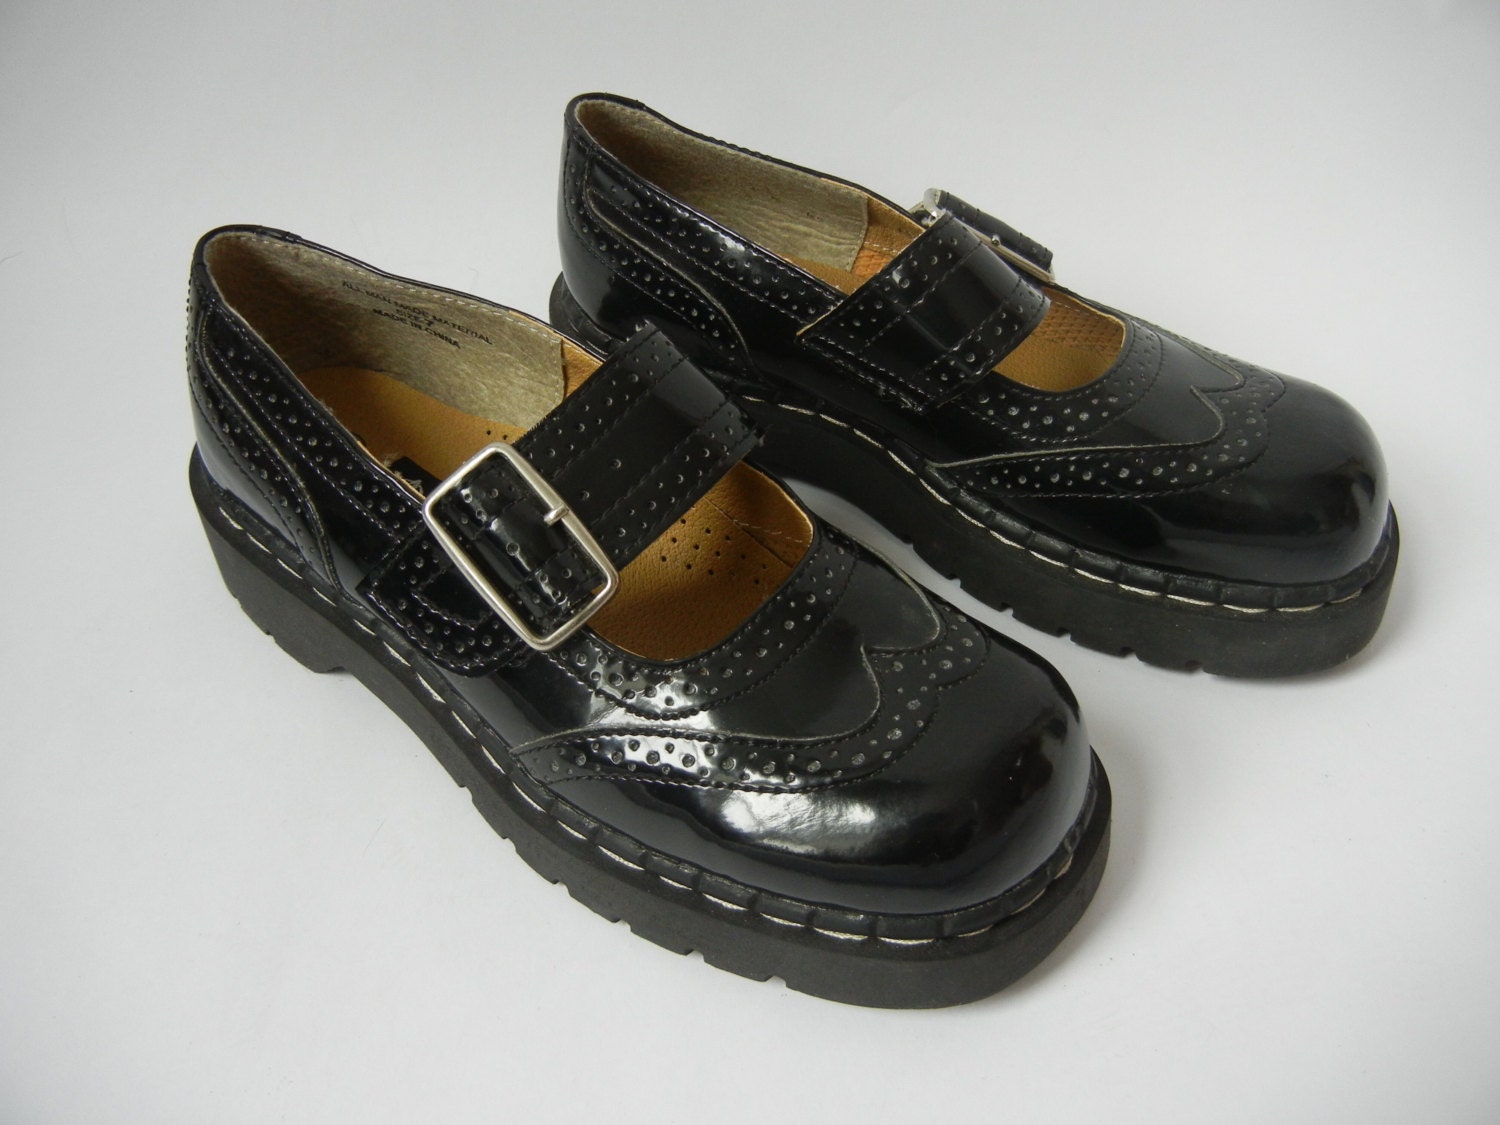  Vintage  Mary  Jane  Shoes  Size 6 5 Black 90 s Punk